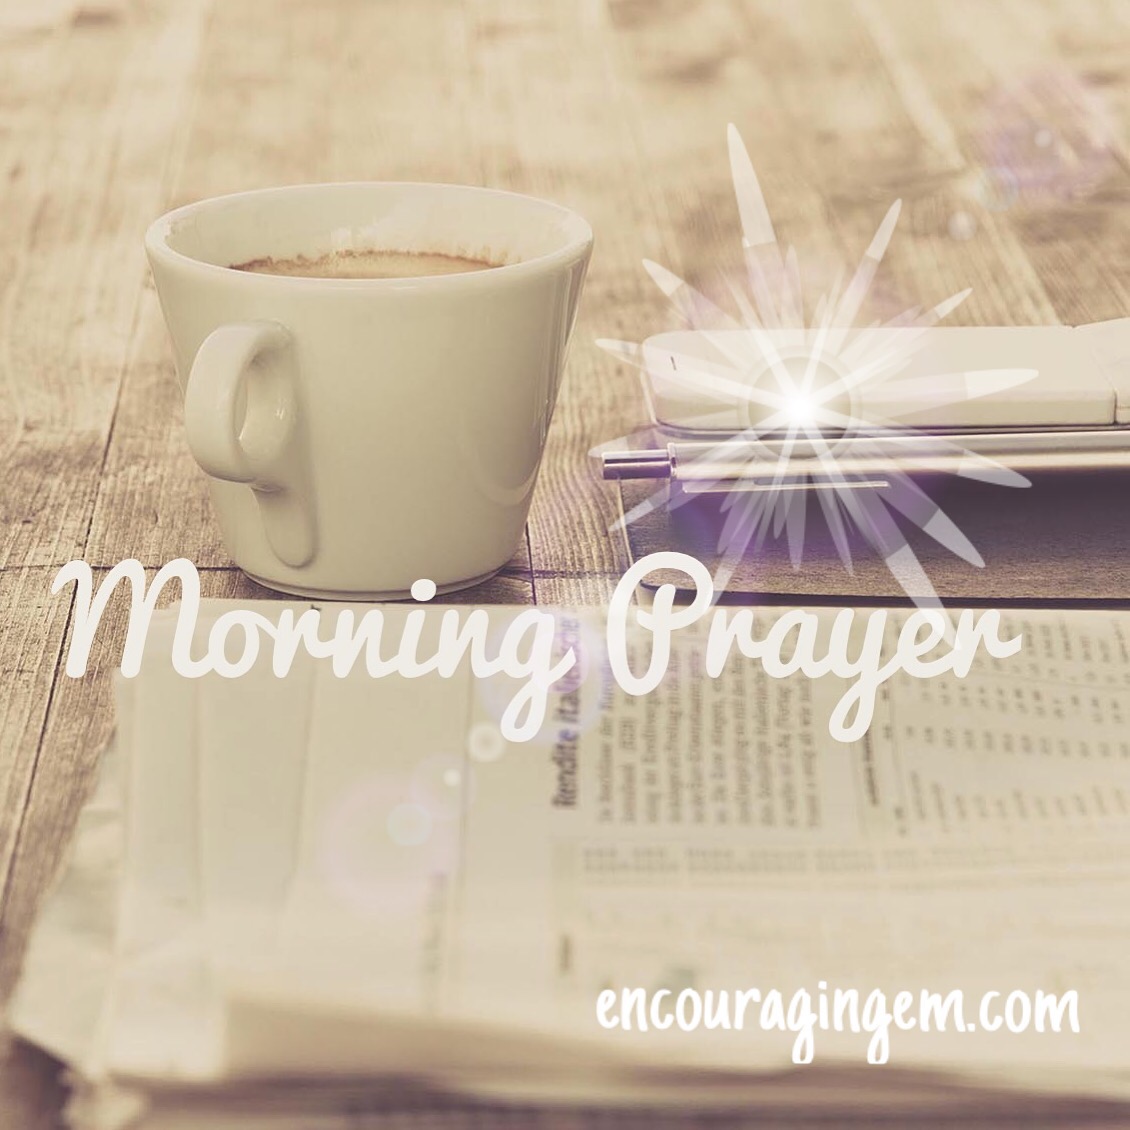 morning prayer | Encouraging Em